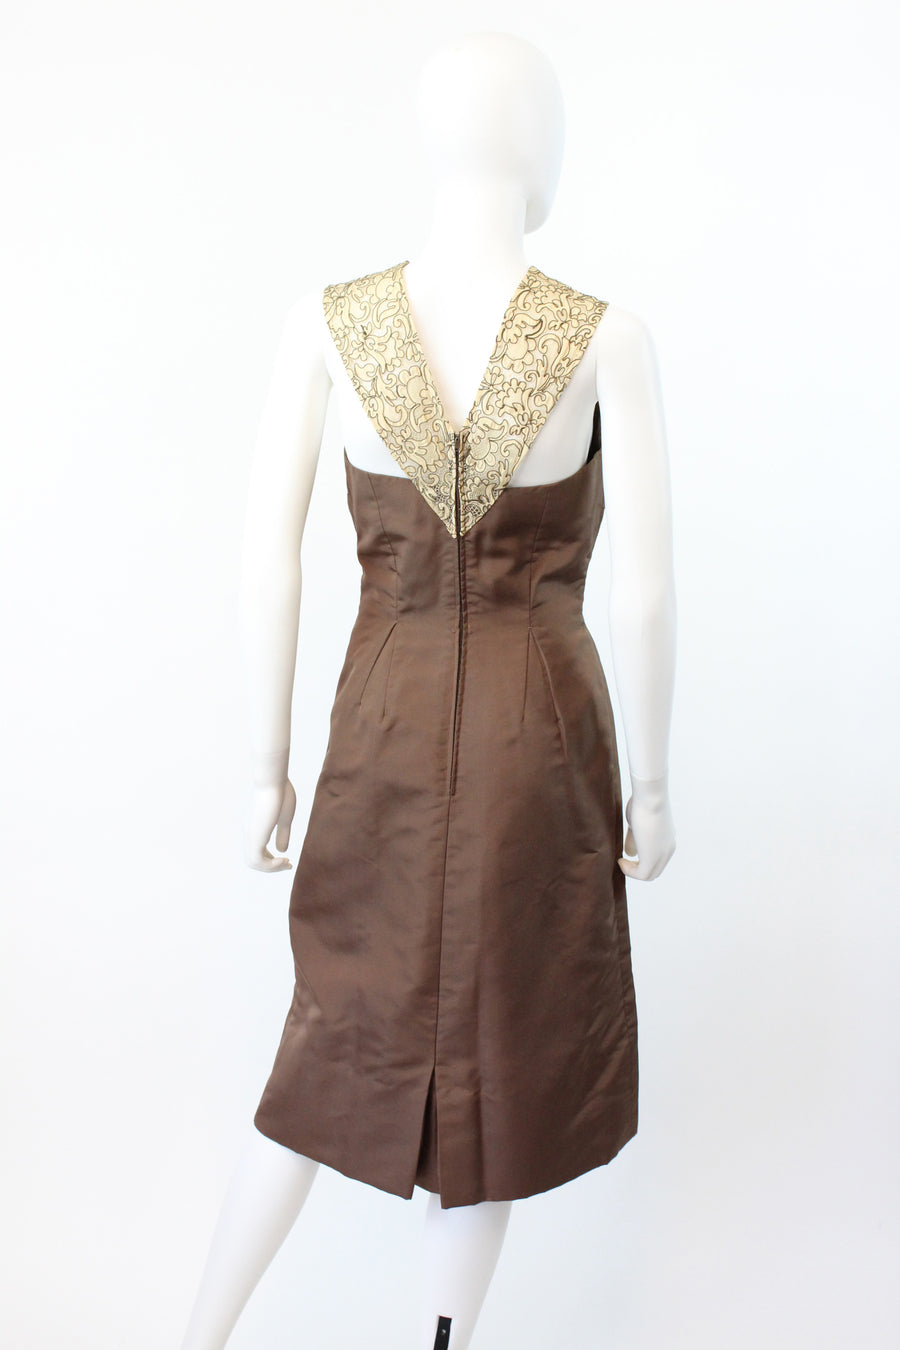 1950s Oleg Cassini wiggle dress small | new fall